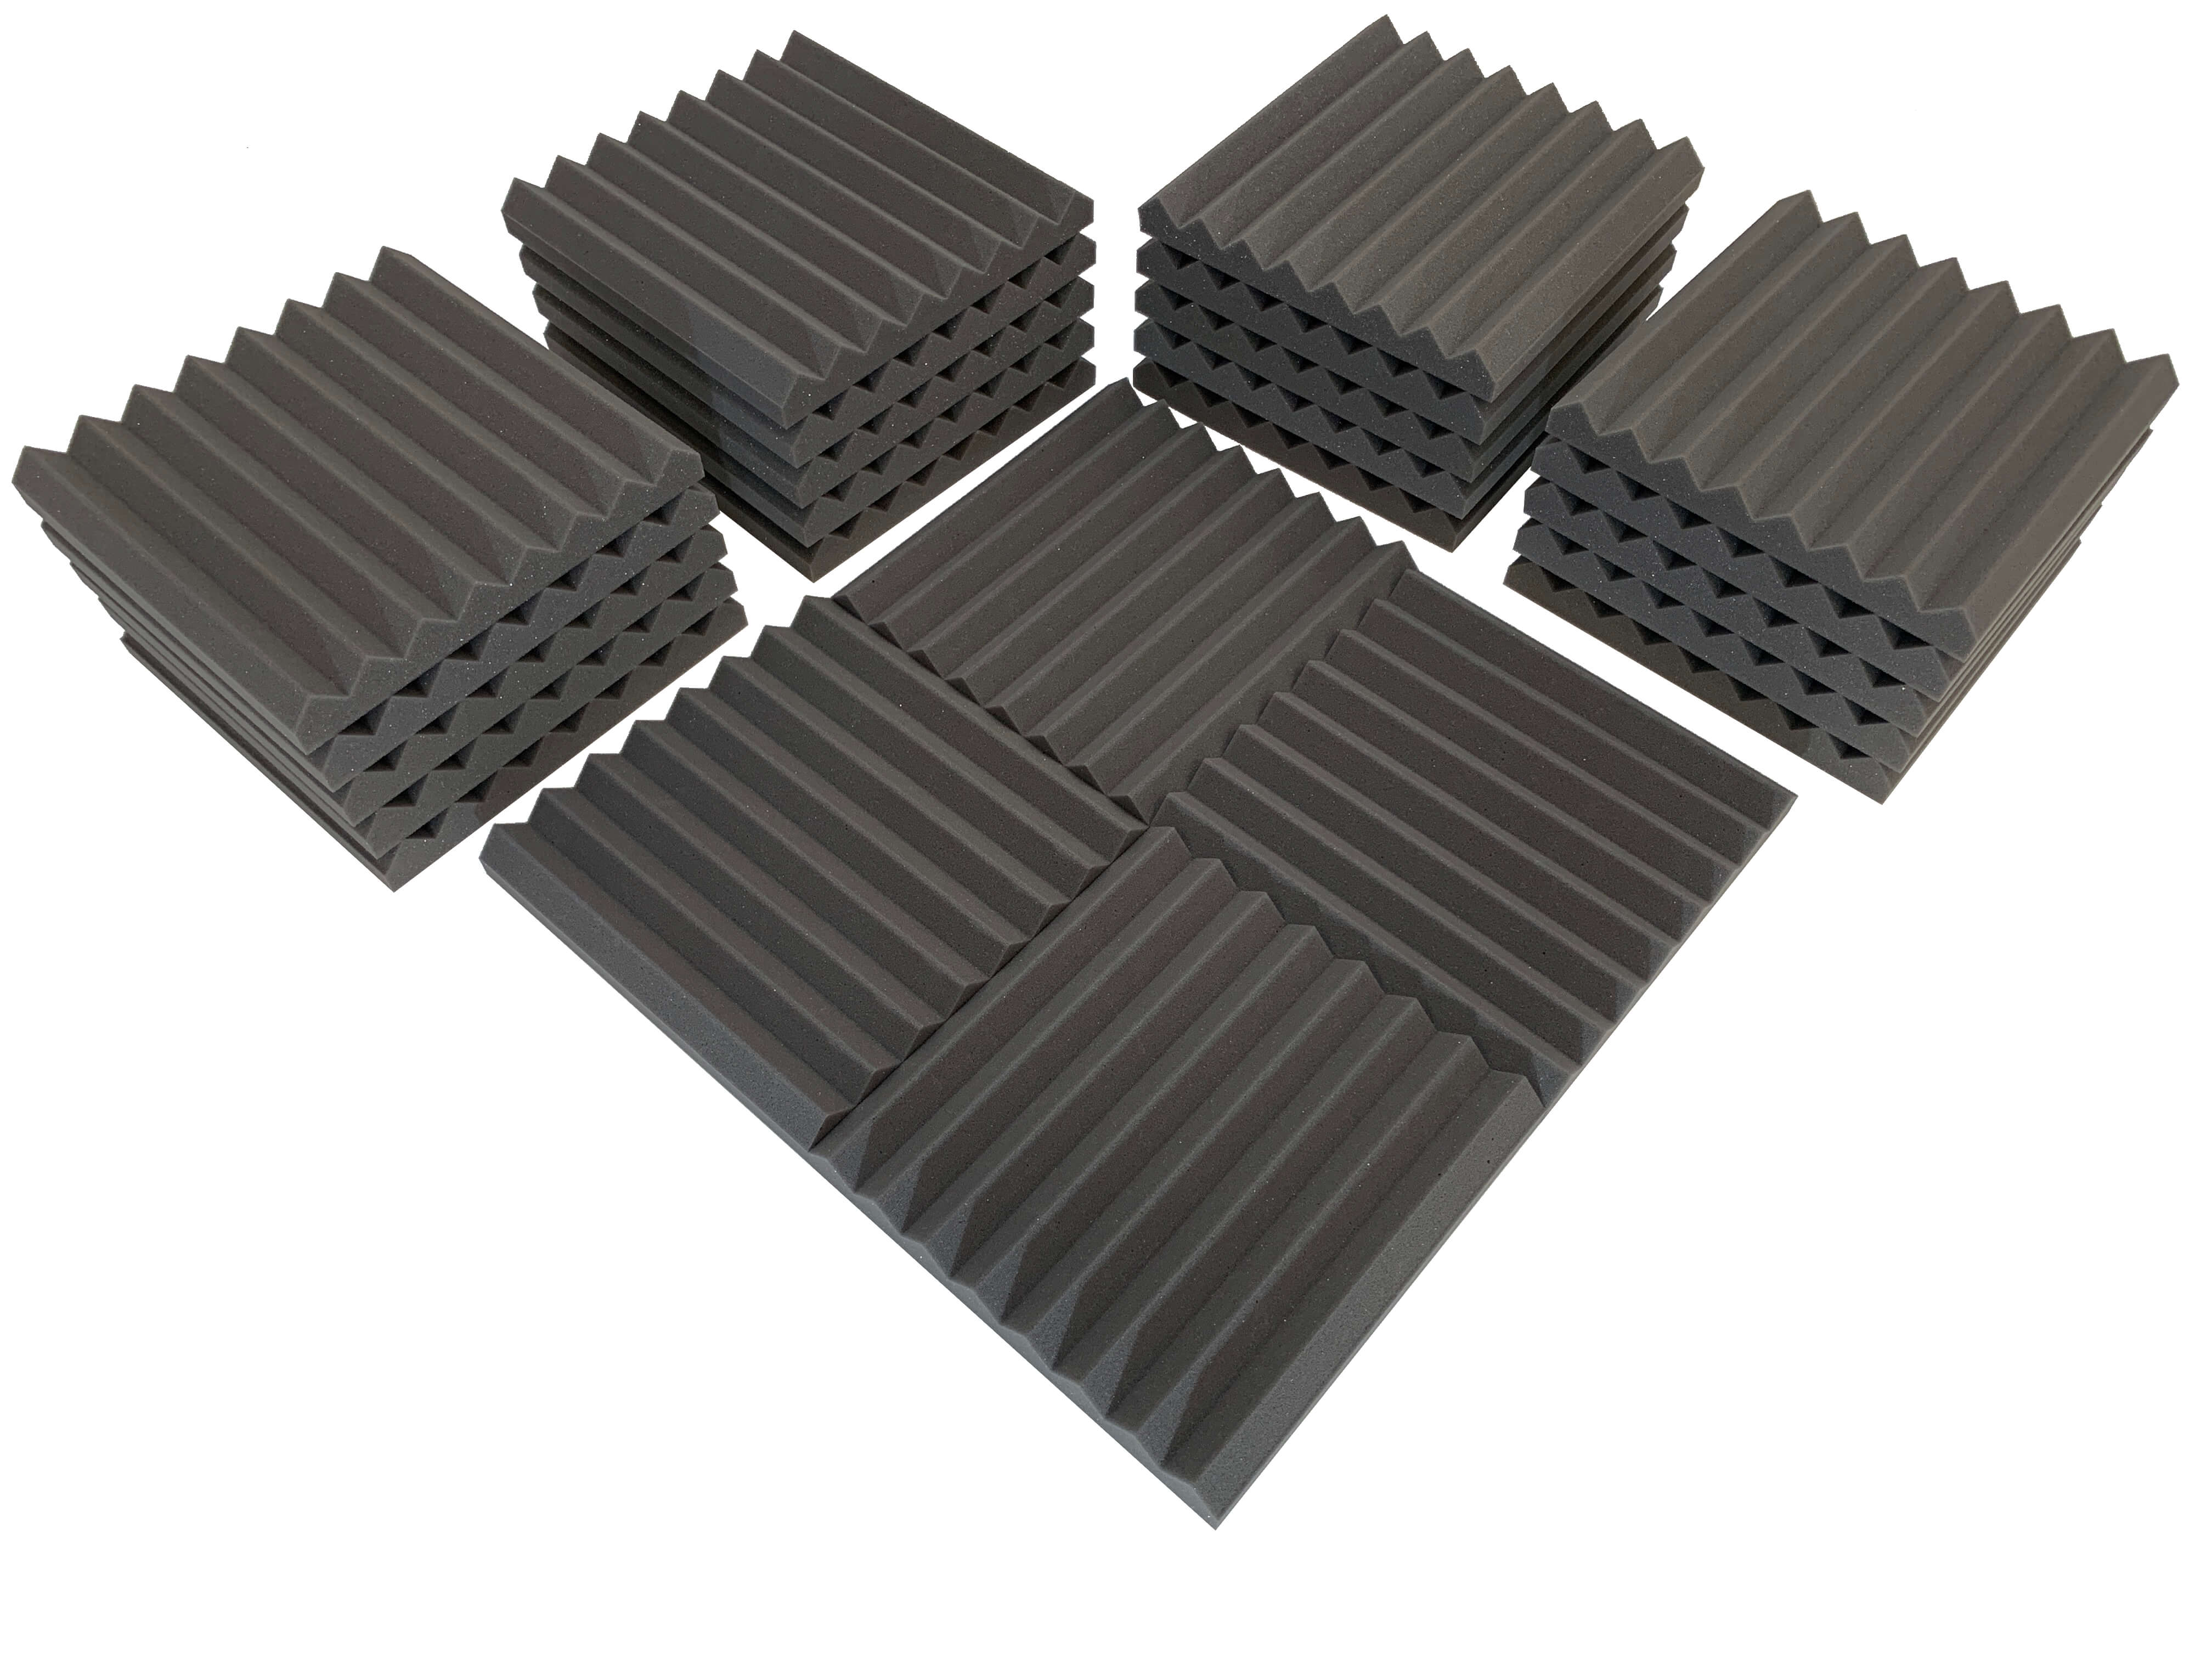 Wedge 12" Acoustic Studio Foam Tile Pack - 24 Tiles, 2.2qm Coverage